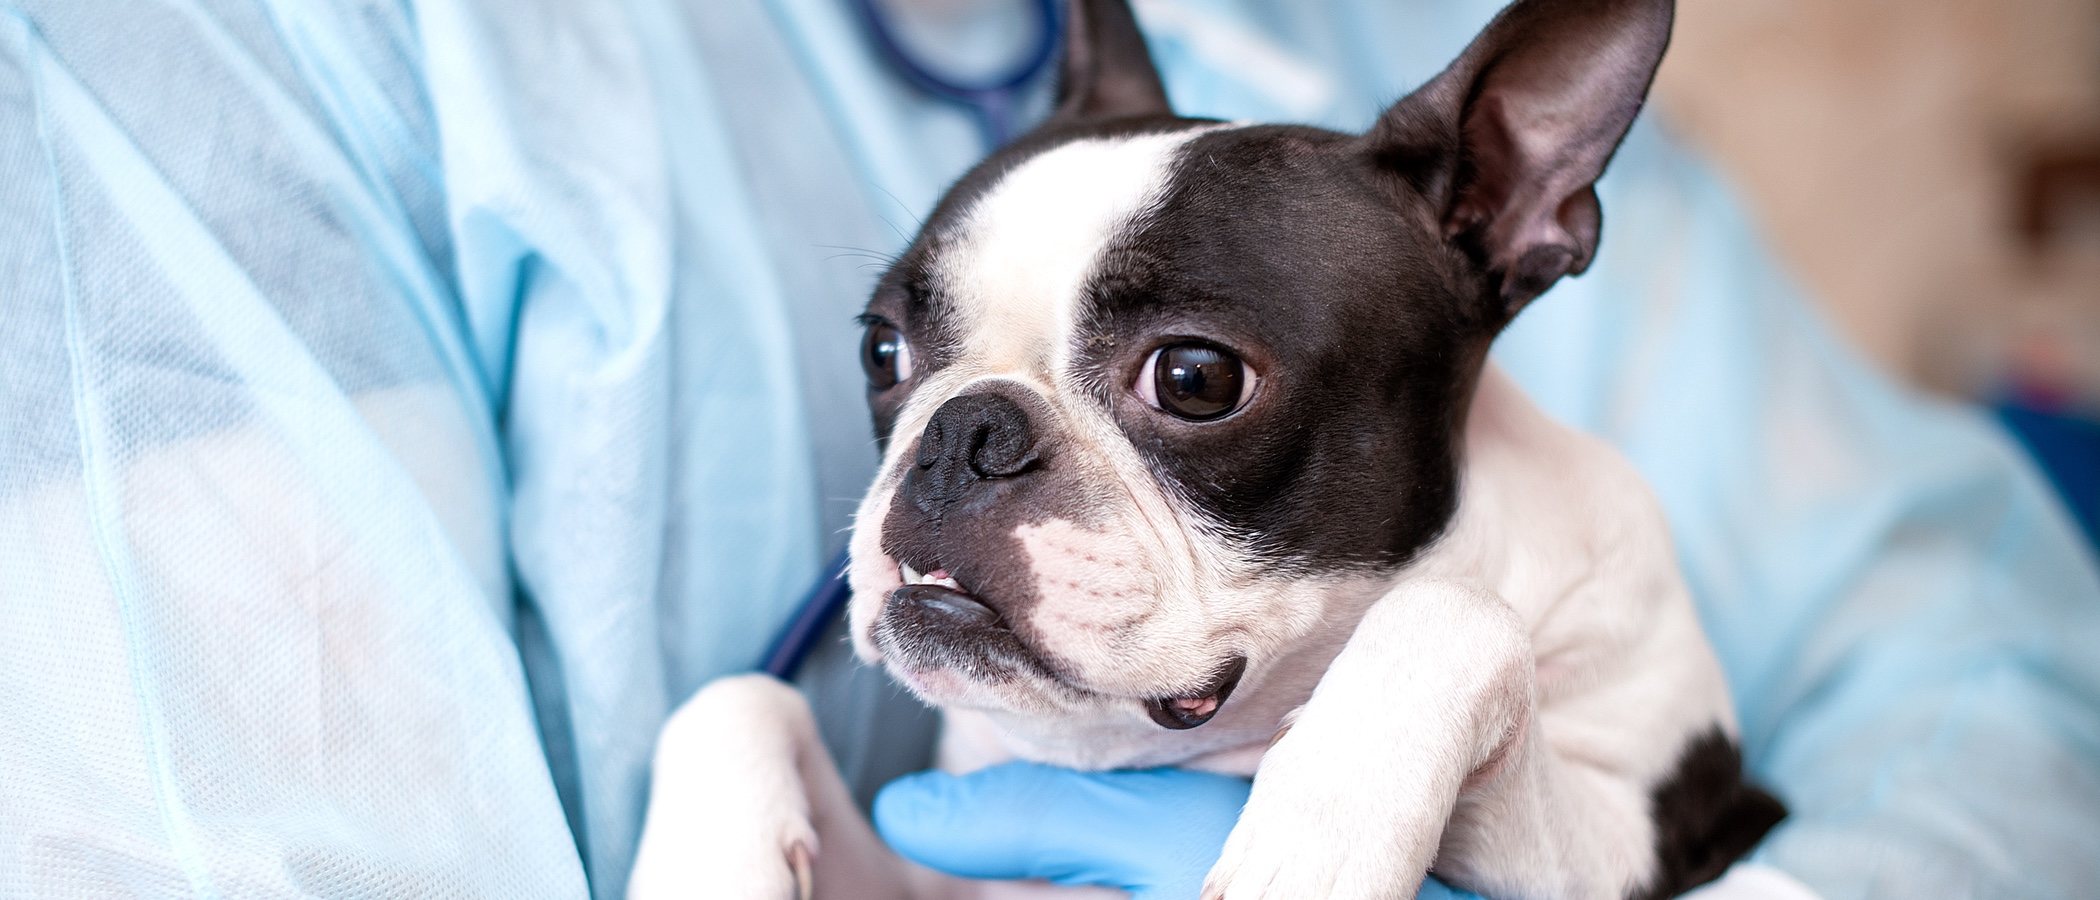 Cómo salvar la vida a tu mascota: primeros auxilios